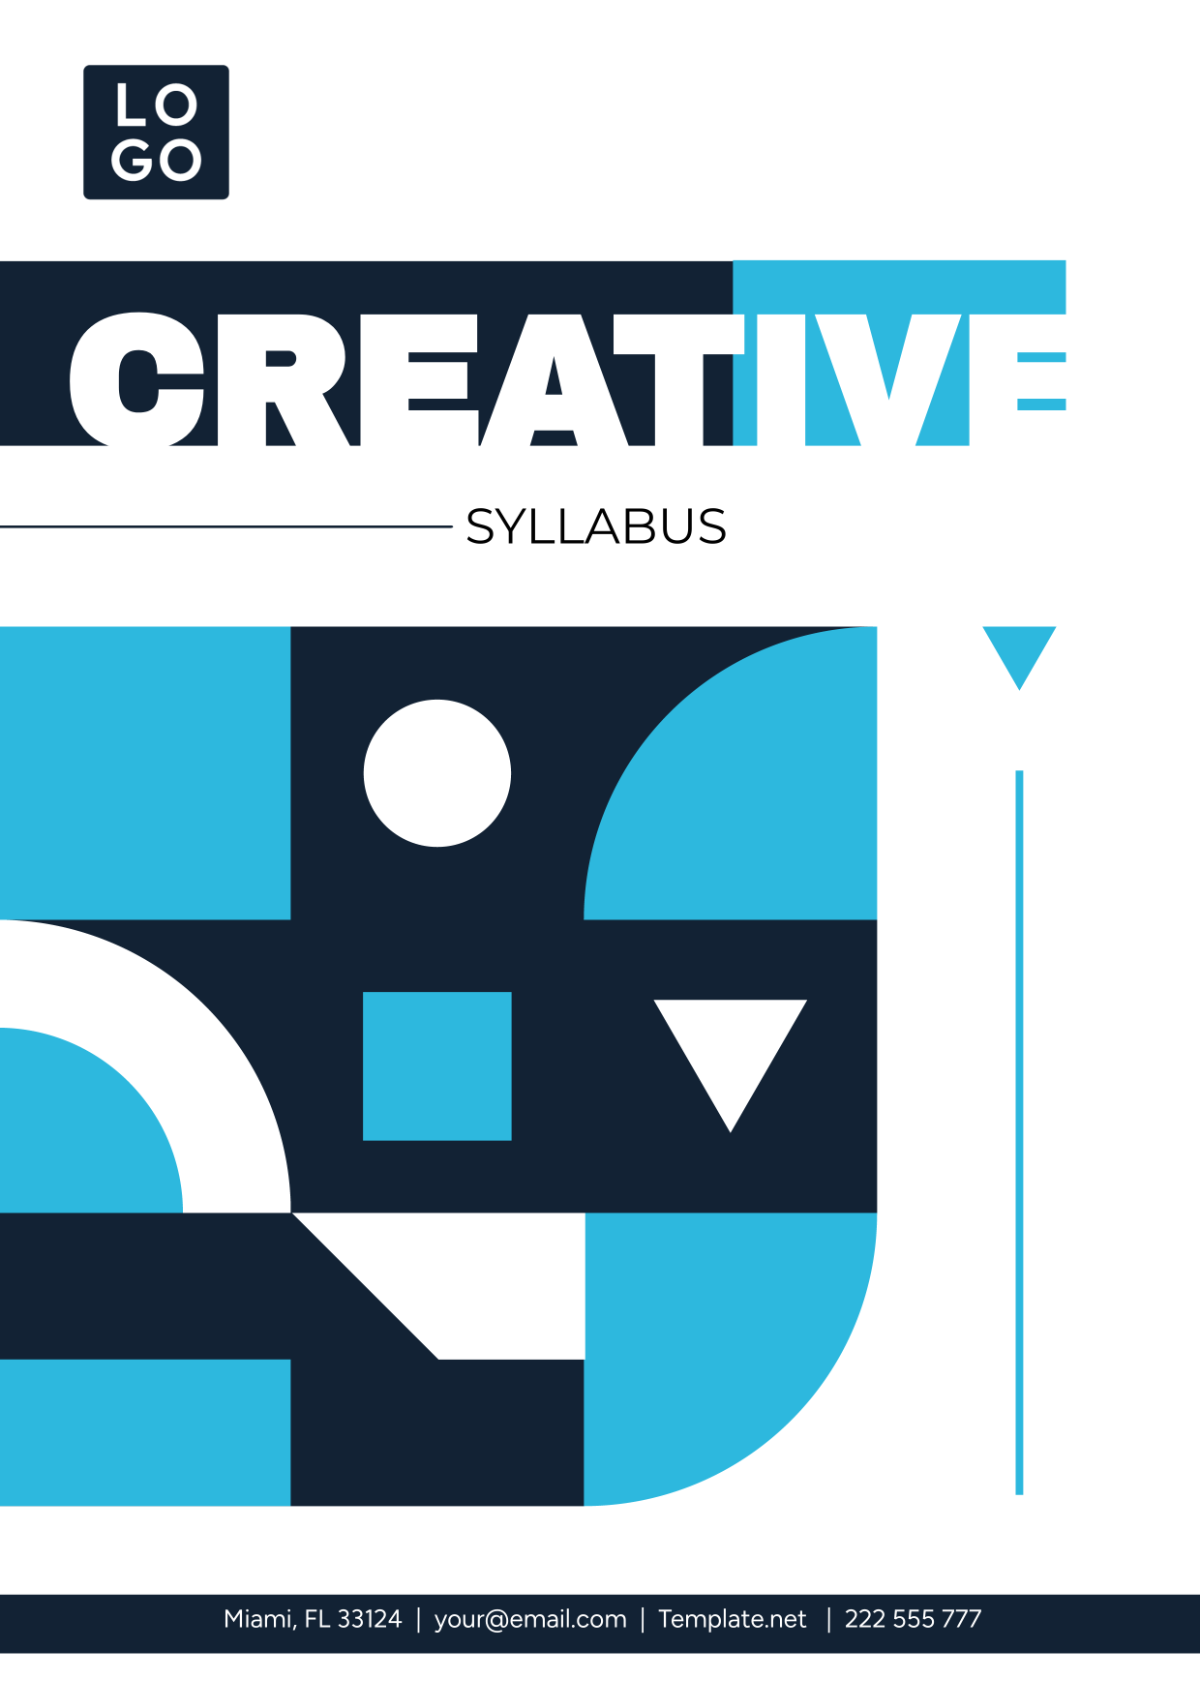 Creative Syllabus Cover Page